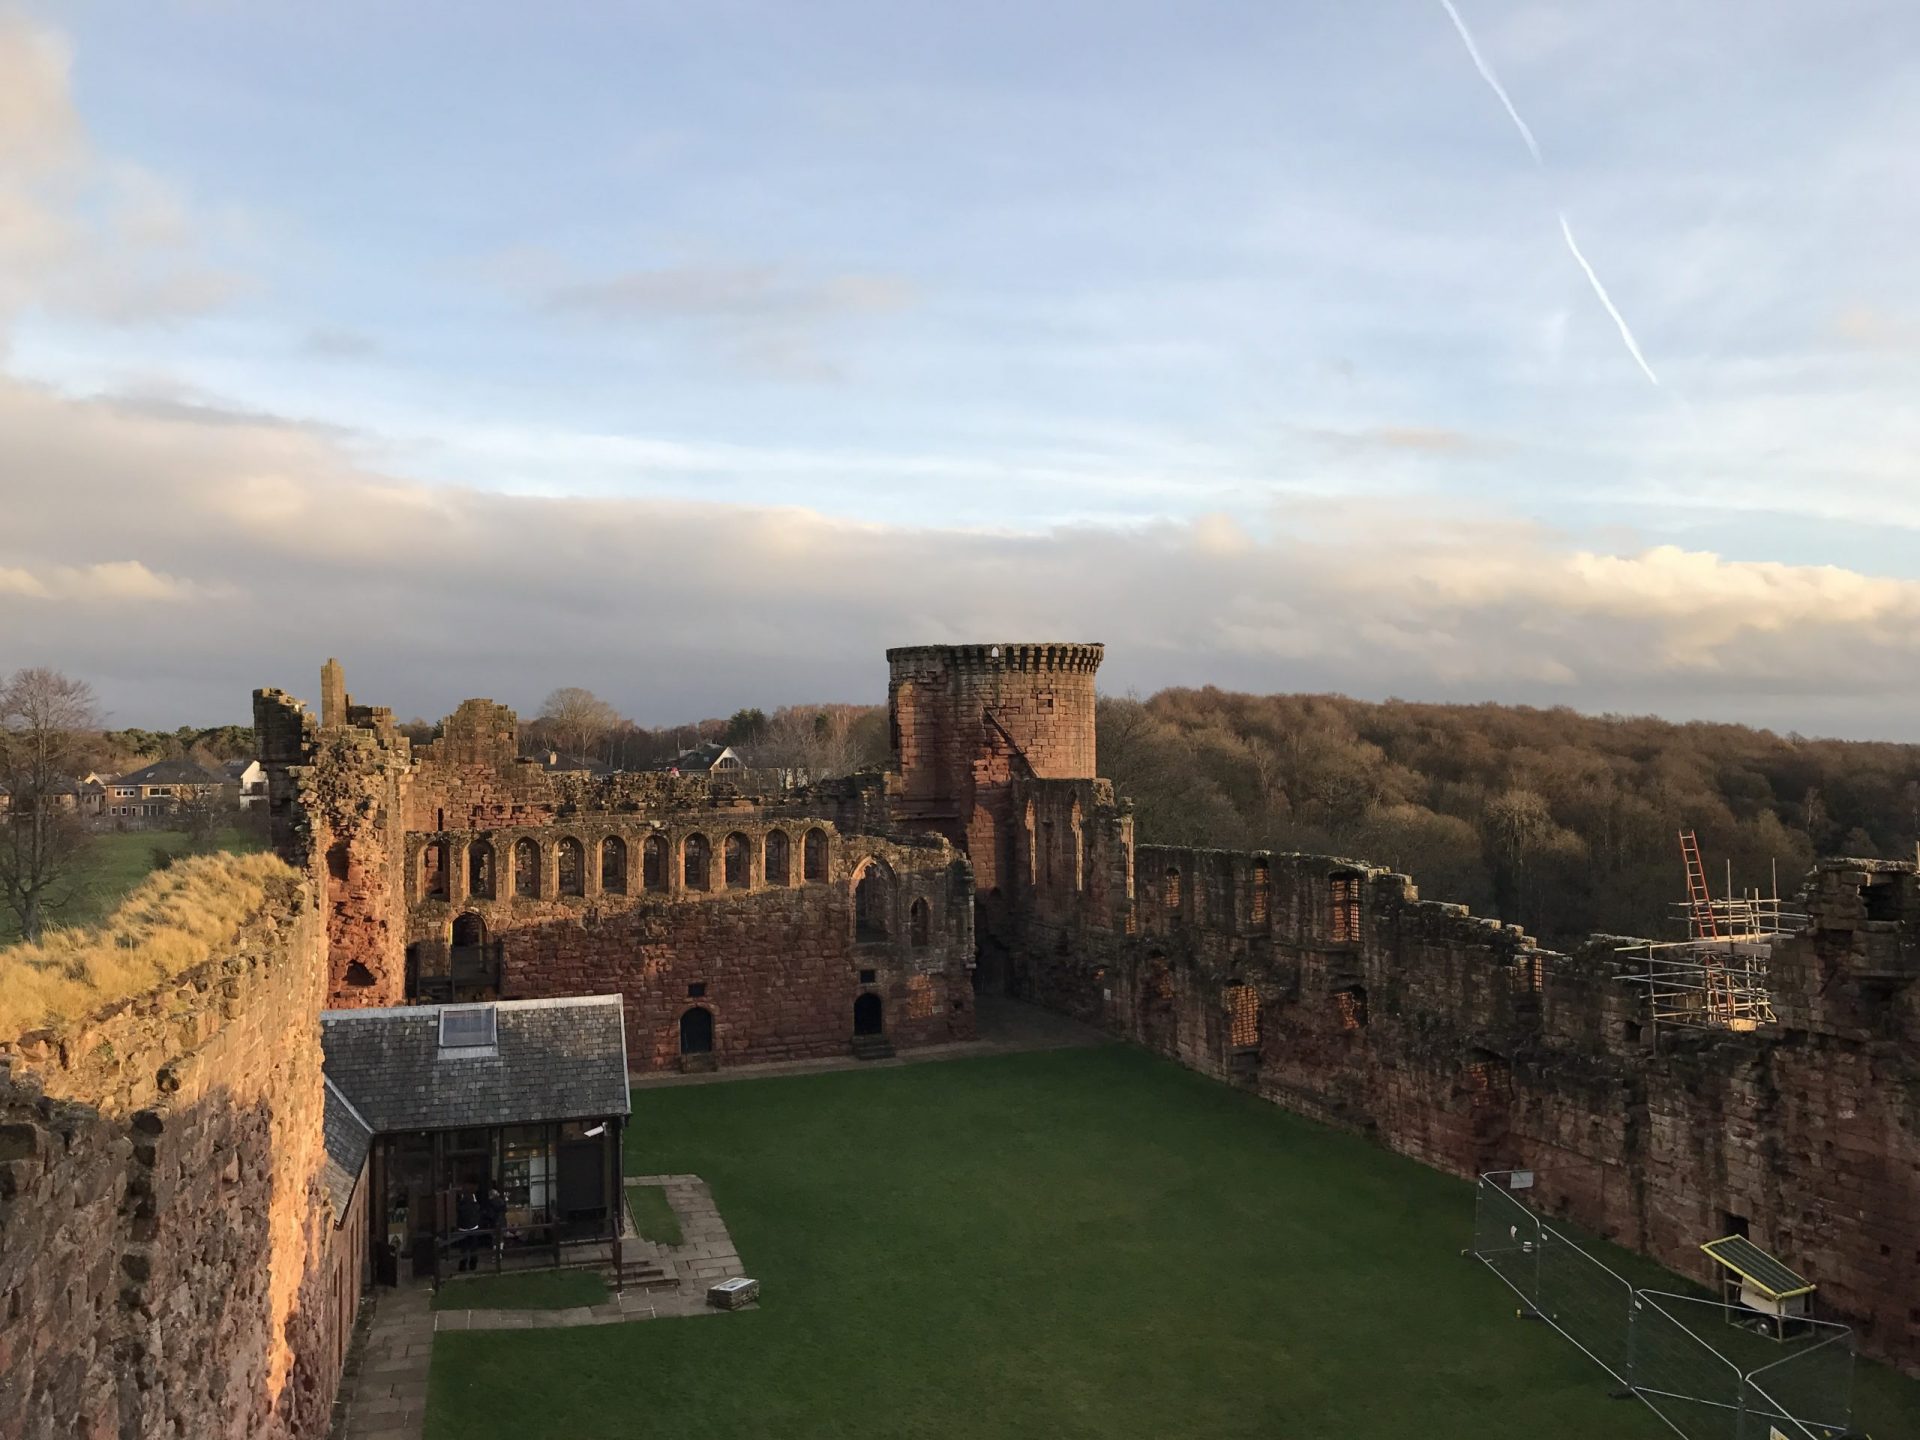 bothwell castle scotland scaled - Travel Contests: March 13, 2019 - Scotland, Ireland, Portugal, & more